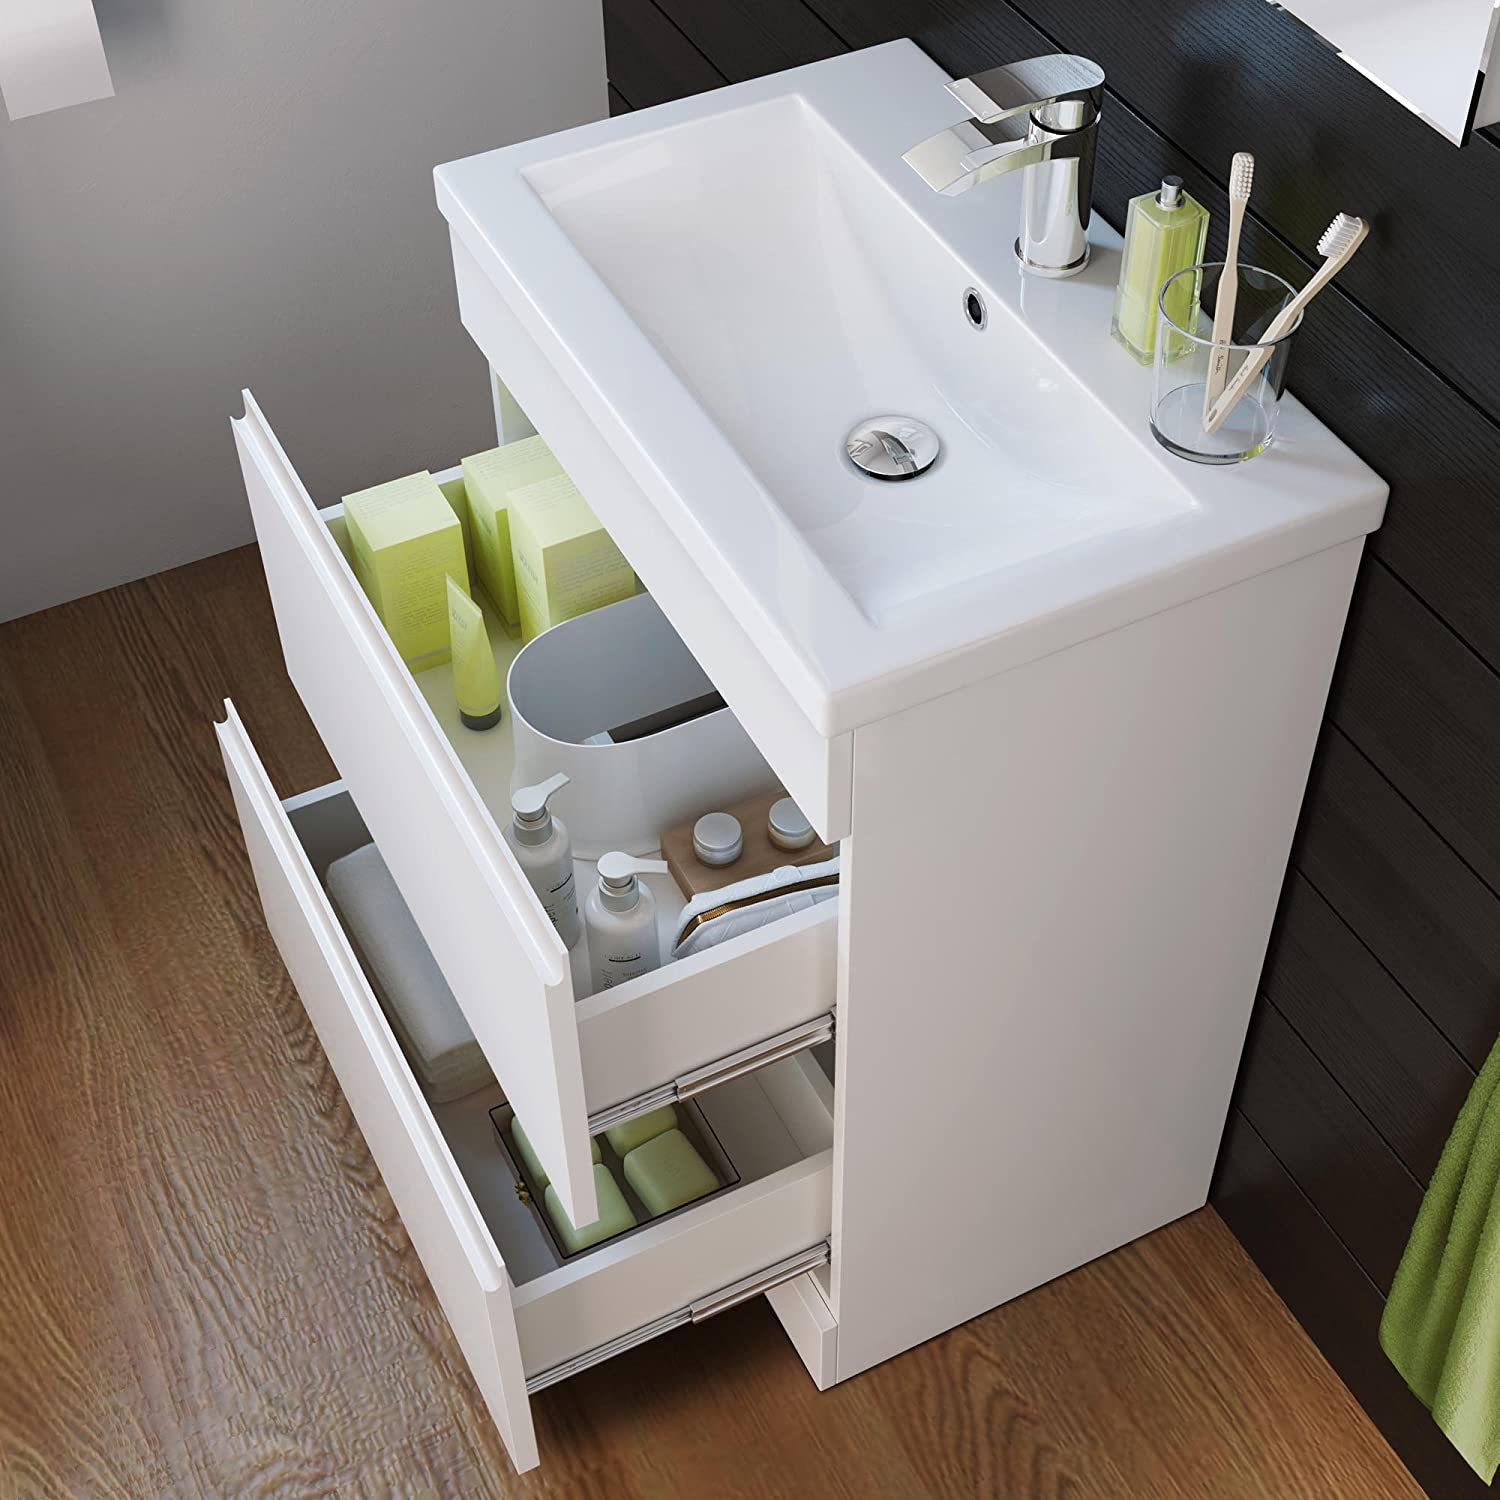 Modern 2 Drawer Floorstanding Vanity Unit With Basin - 838mm x 615mm x 367mm - White